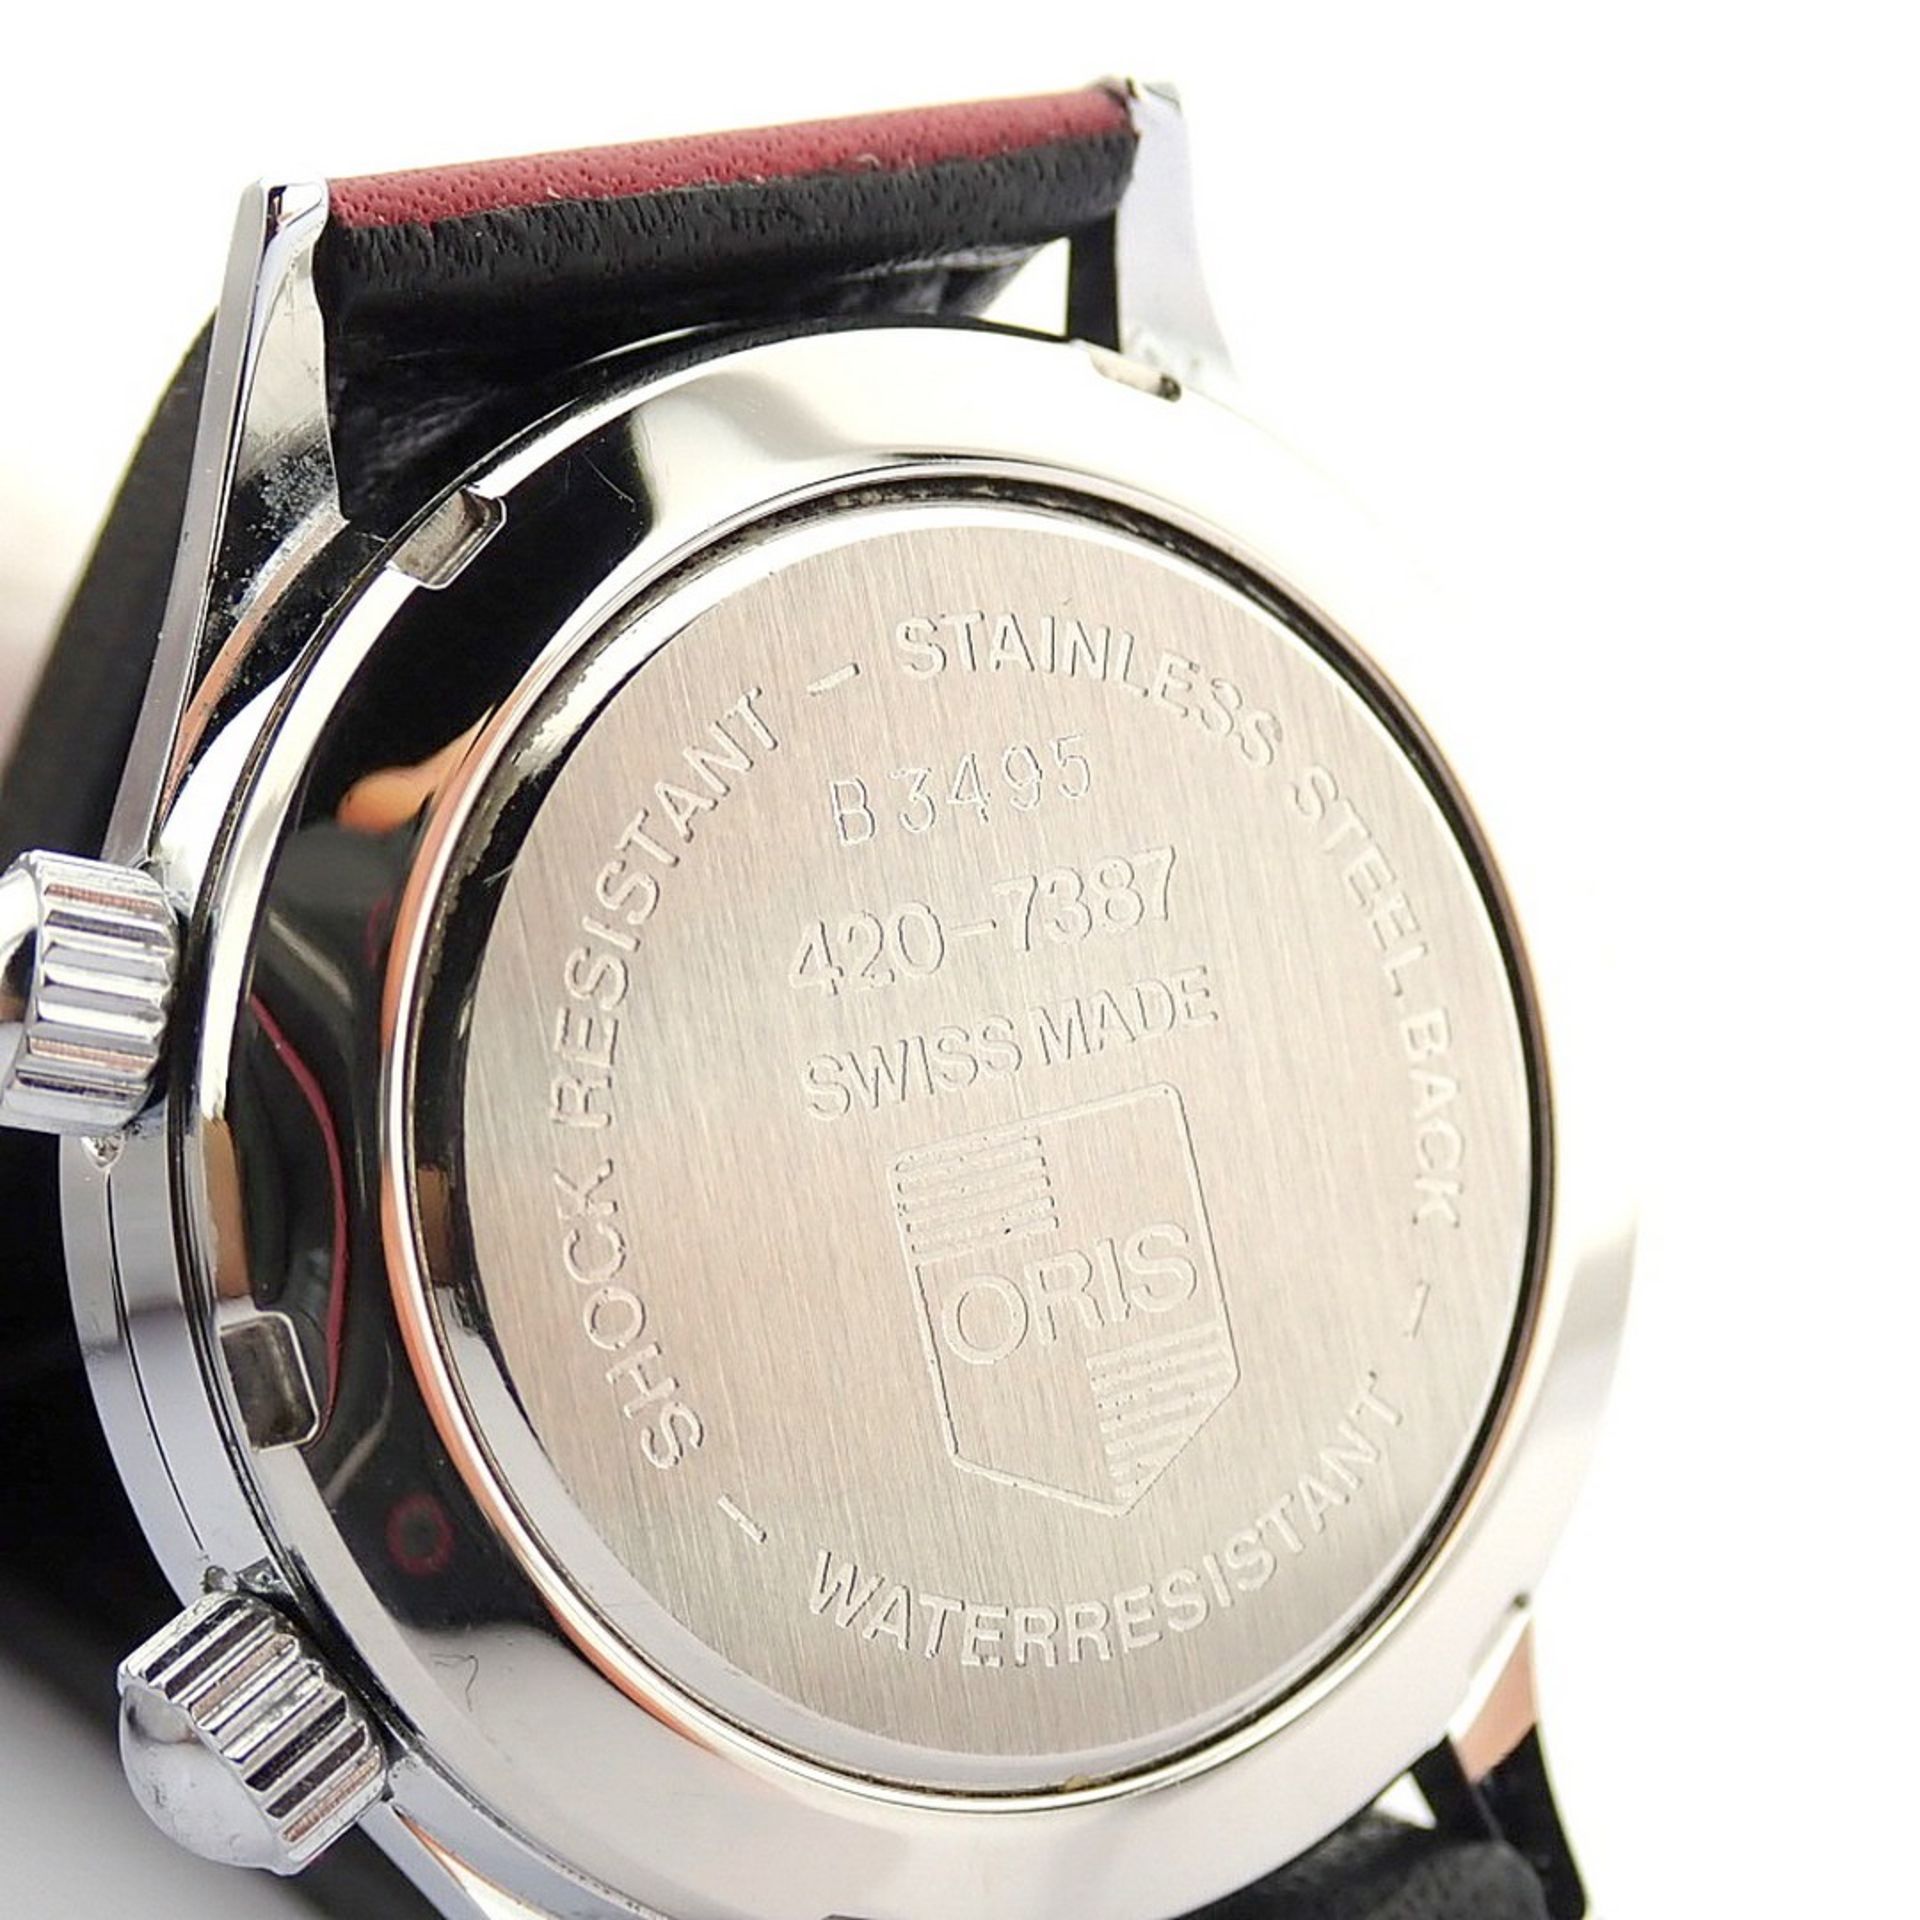 Oris / Wirstalarm 17 Jewels Anti-Shock - Gentlemen's Steel Wristwatch - Image 9 of 10